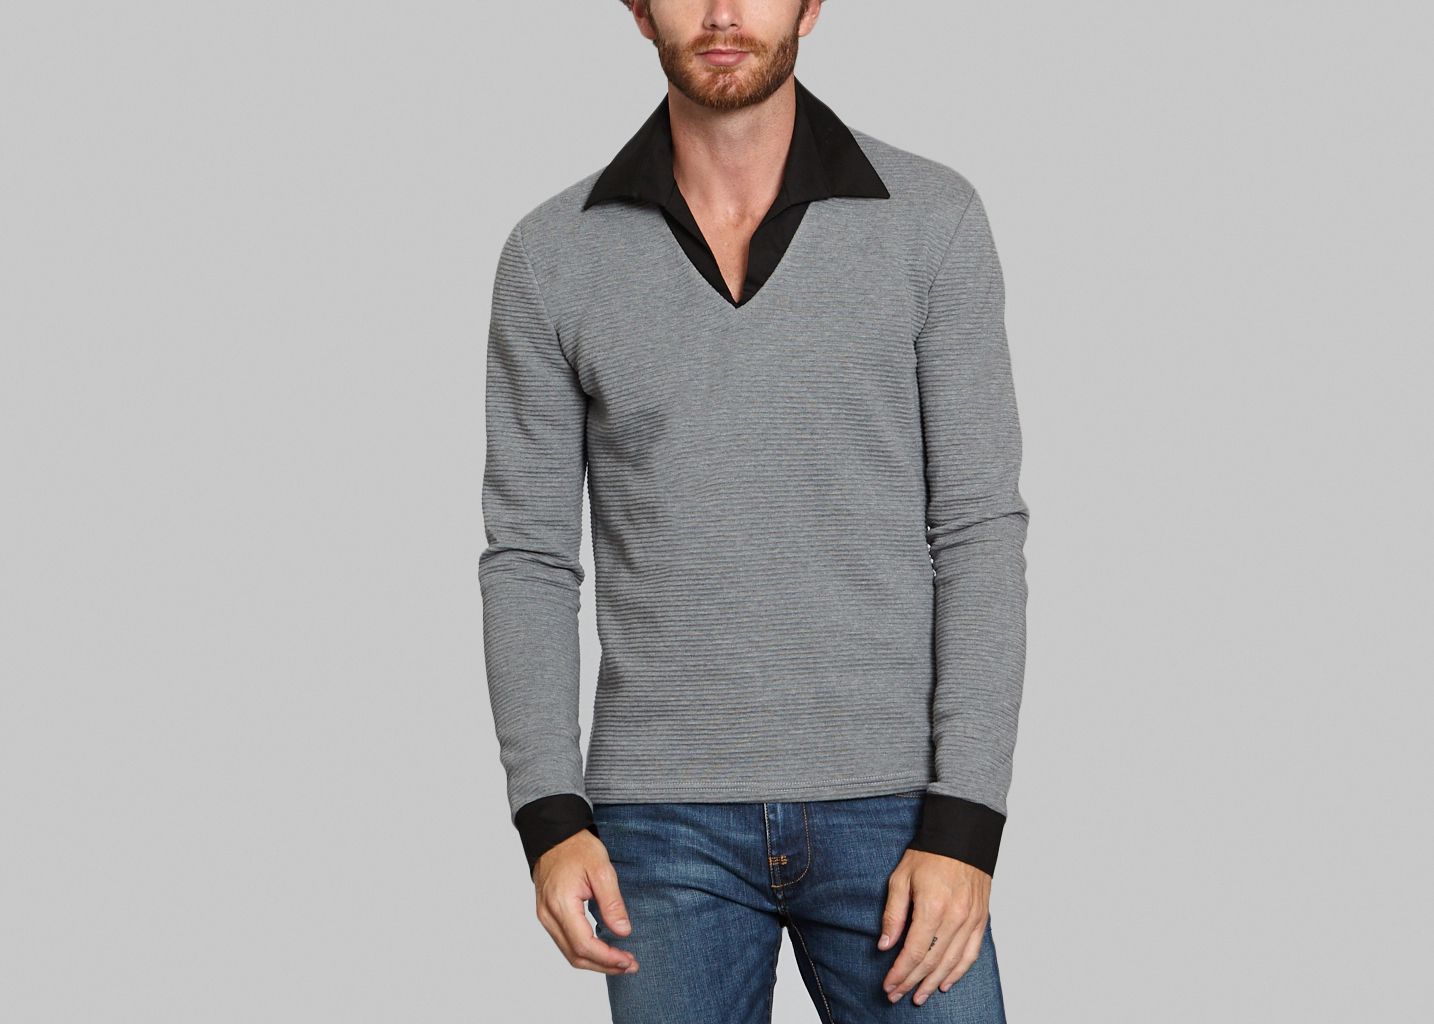 Jacquard sweater - Sébastien Blondin